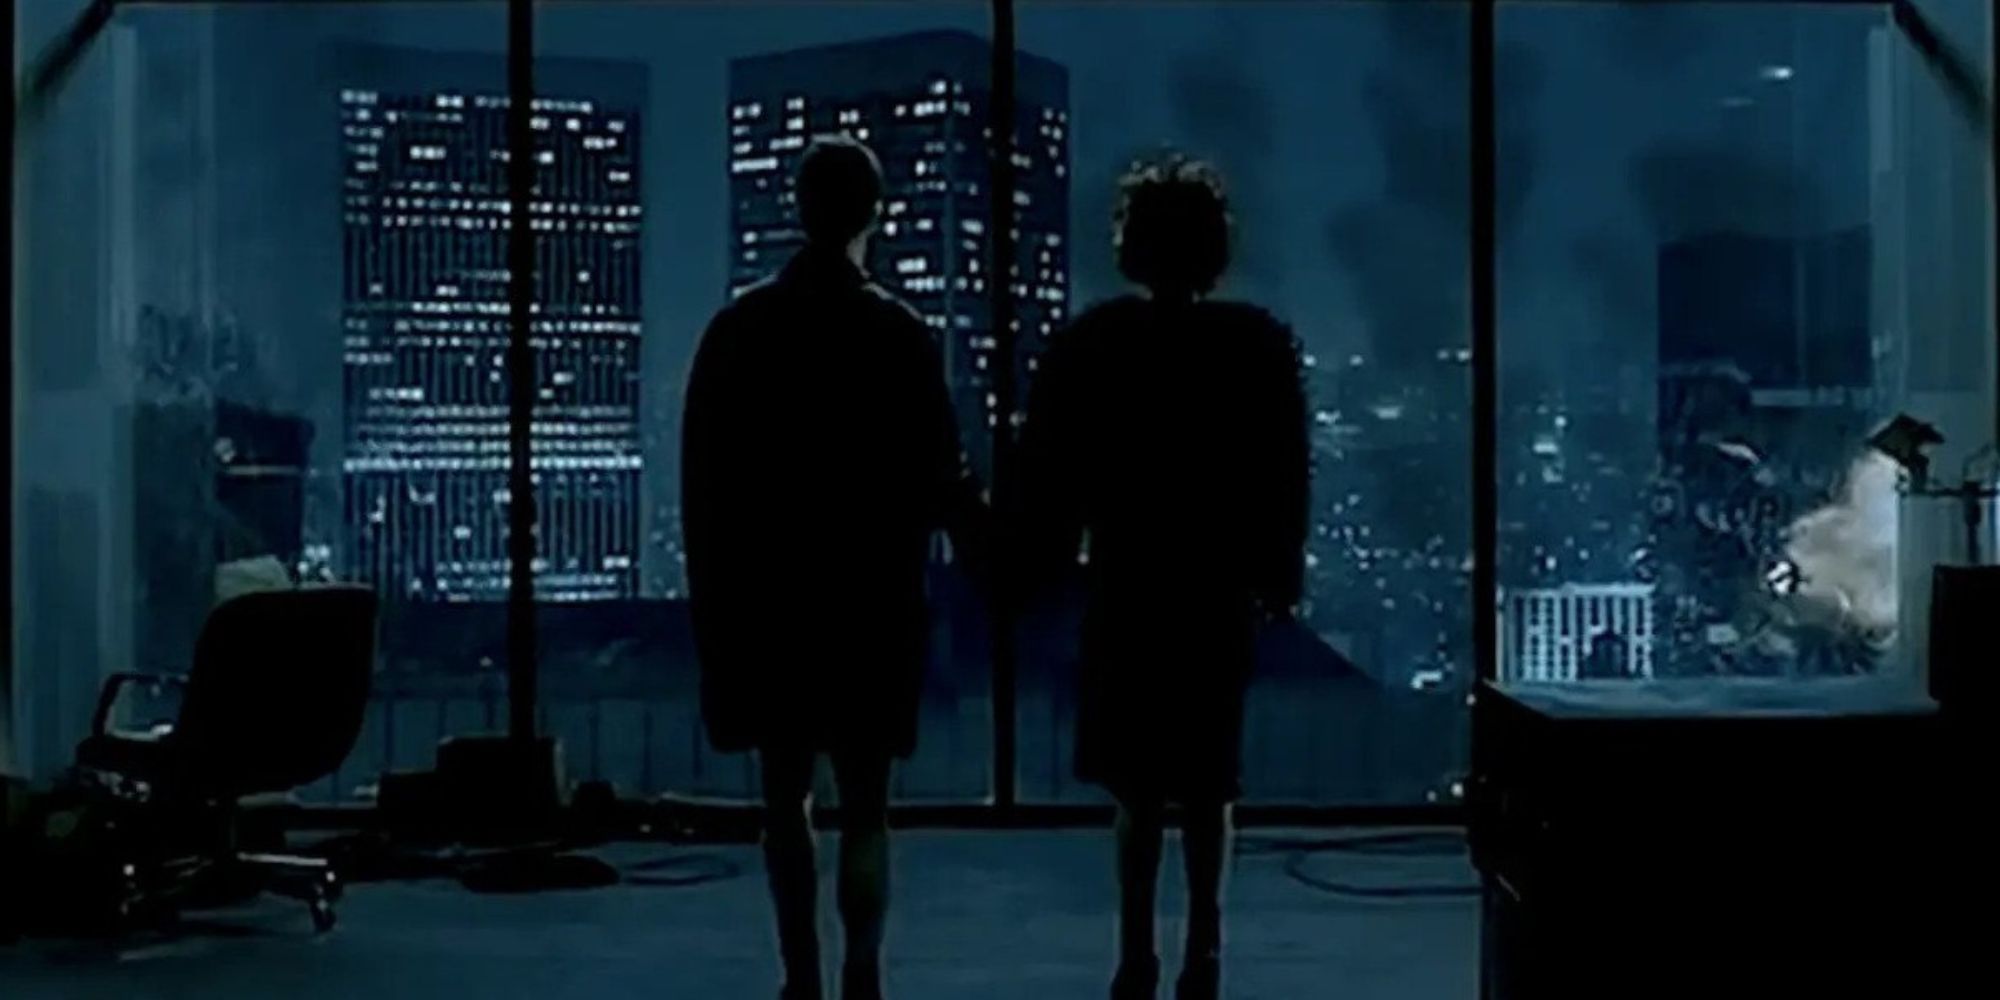 The ending scene from 'Fight Club', featuring Edward Norton & Helena Bonham Carter